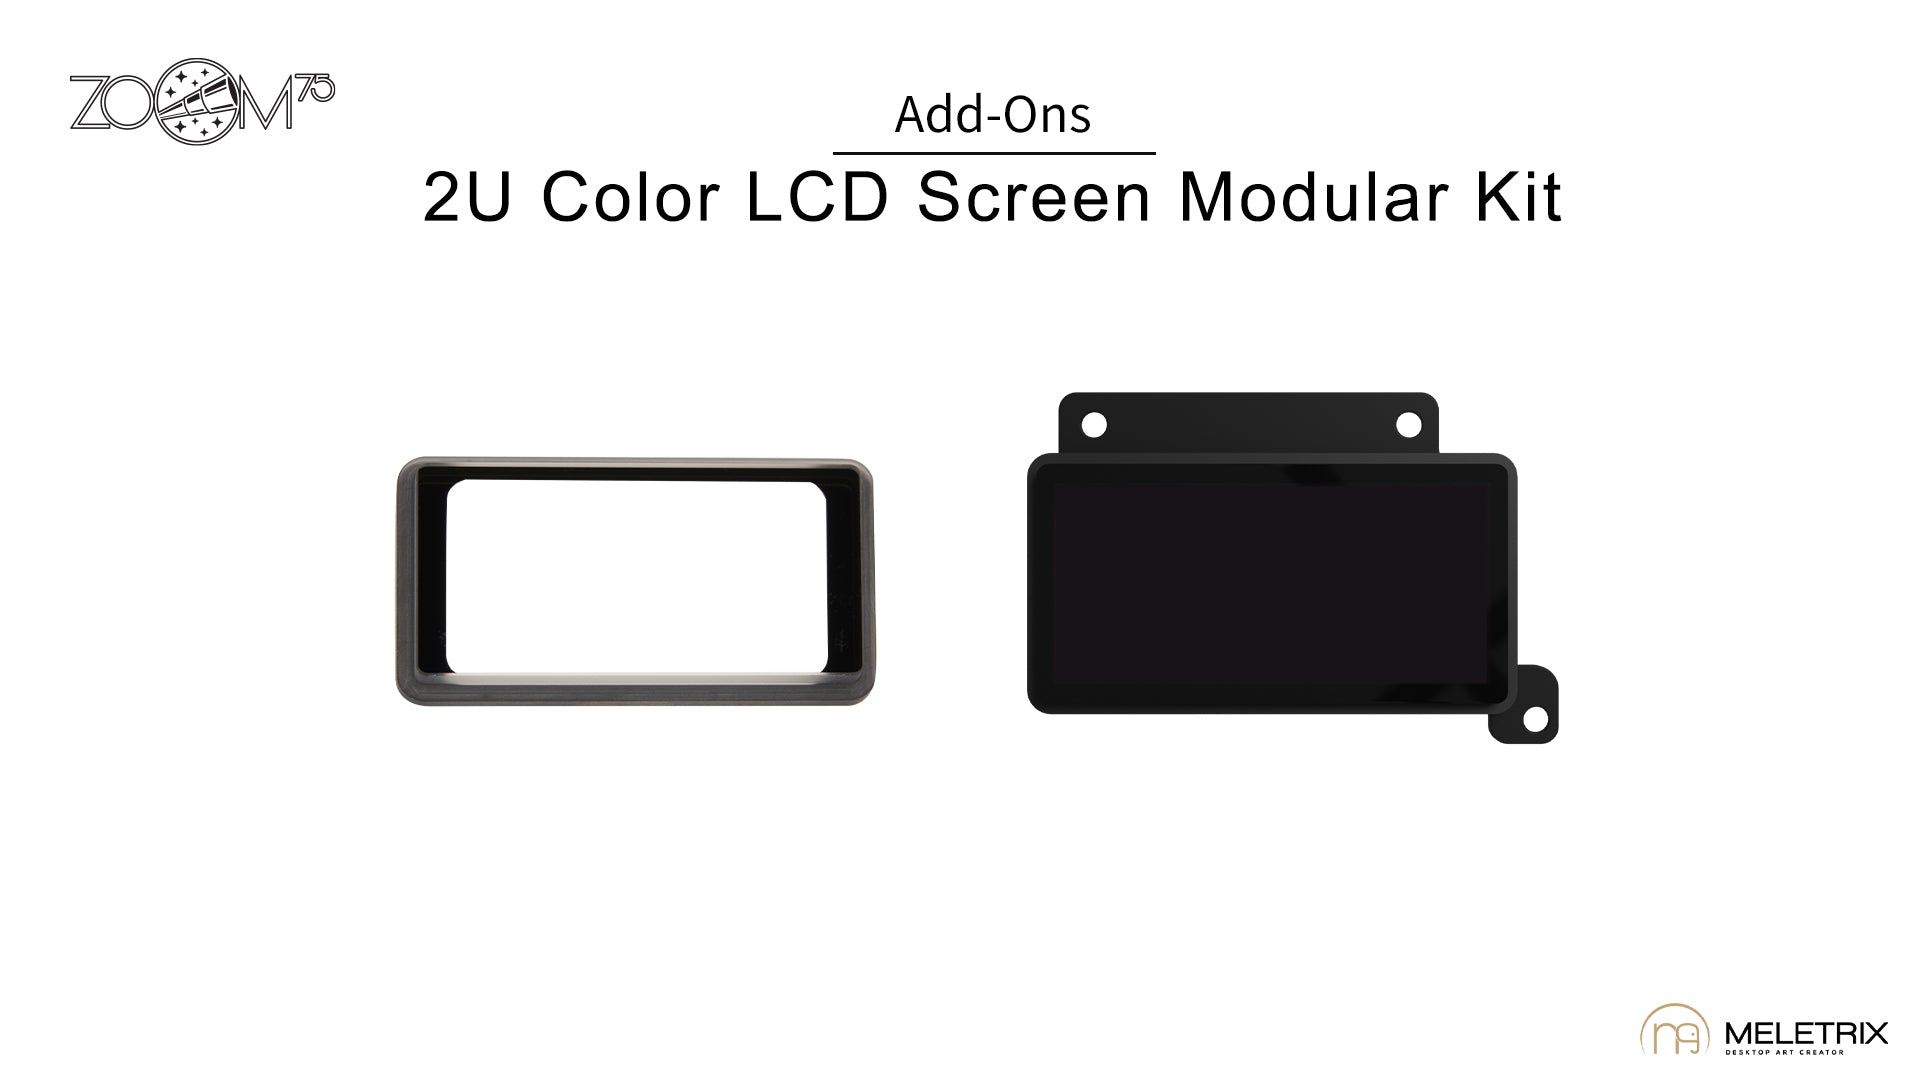 Zoom75 - 2U Color LCD Modular